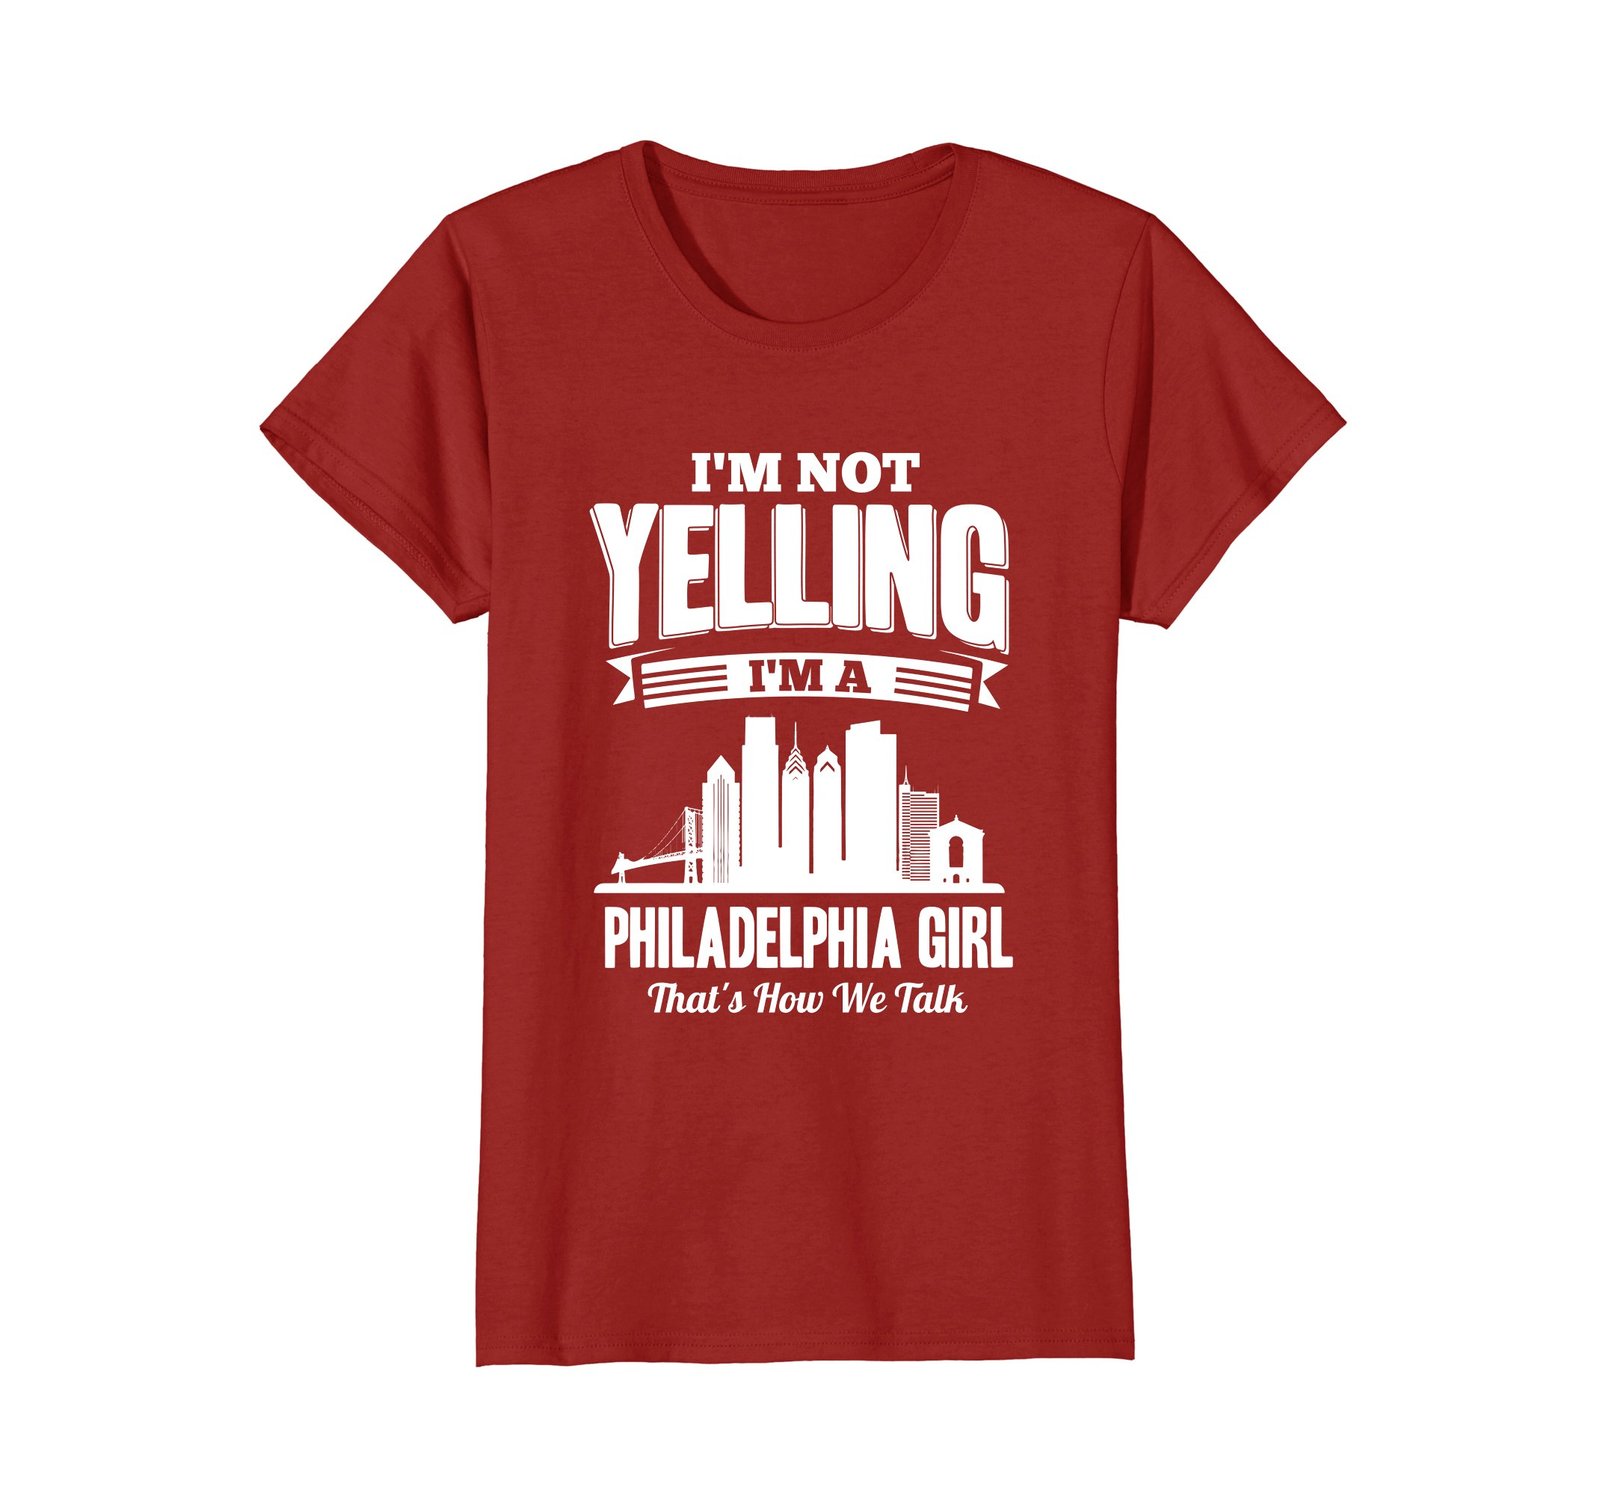 Funny Shirts - I'M NOT YELLING I'M A Philadelphia GIRL T-shirt Wowen